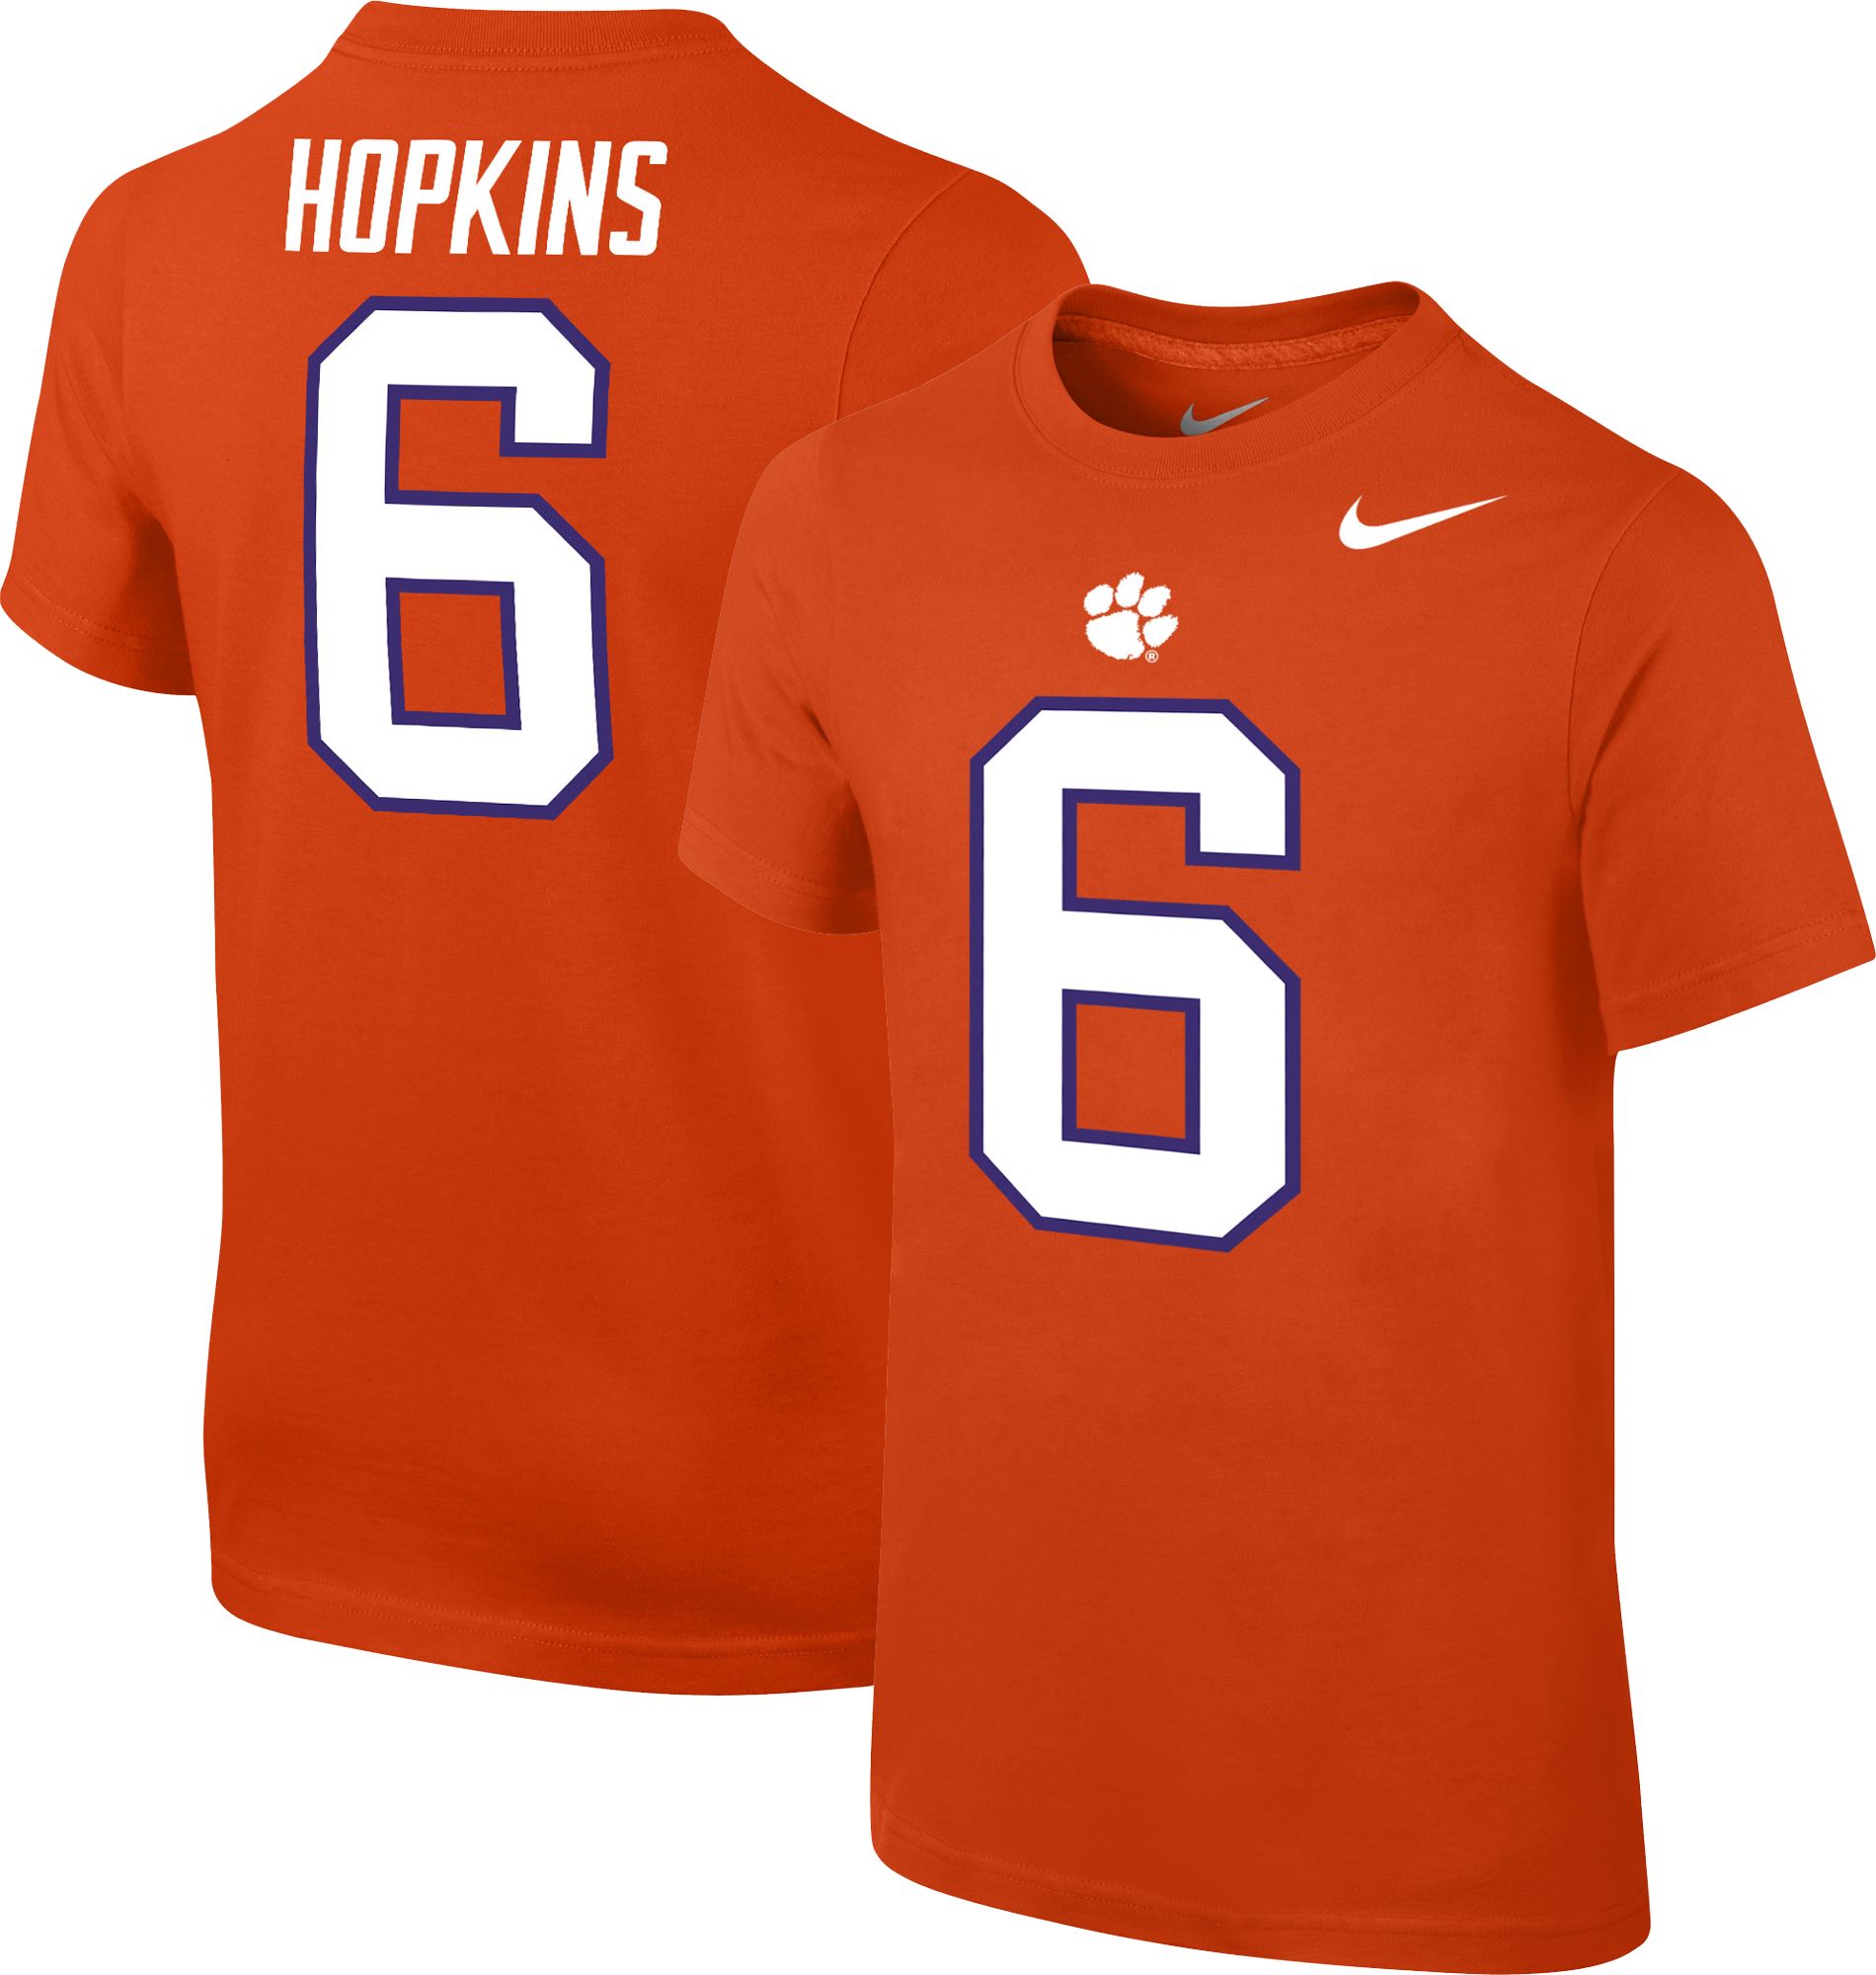 deandre hopkins youth jersey